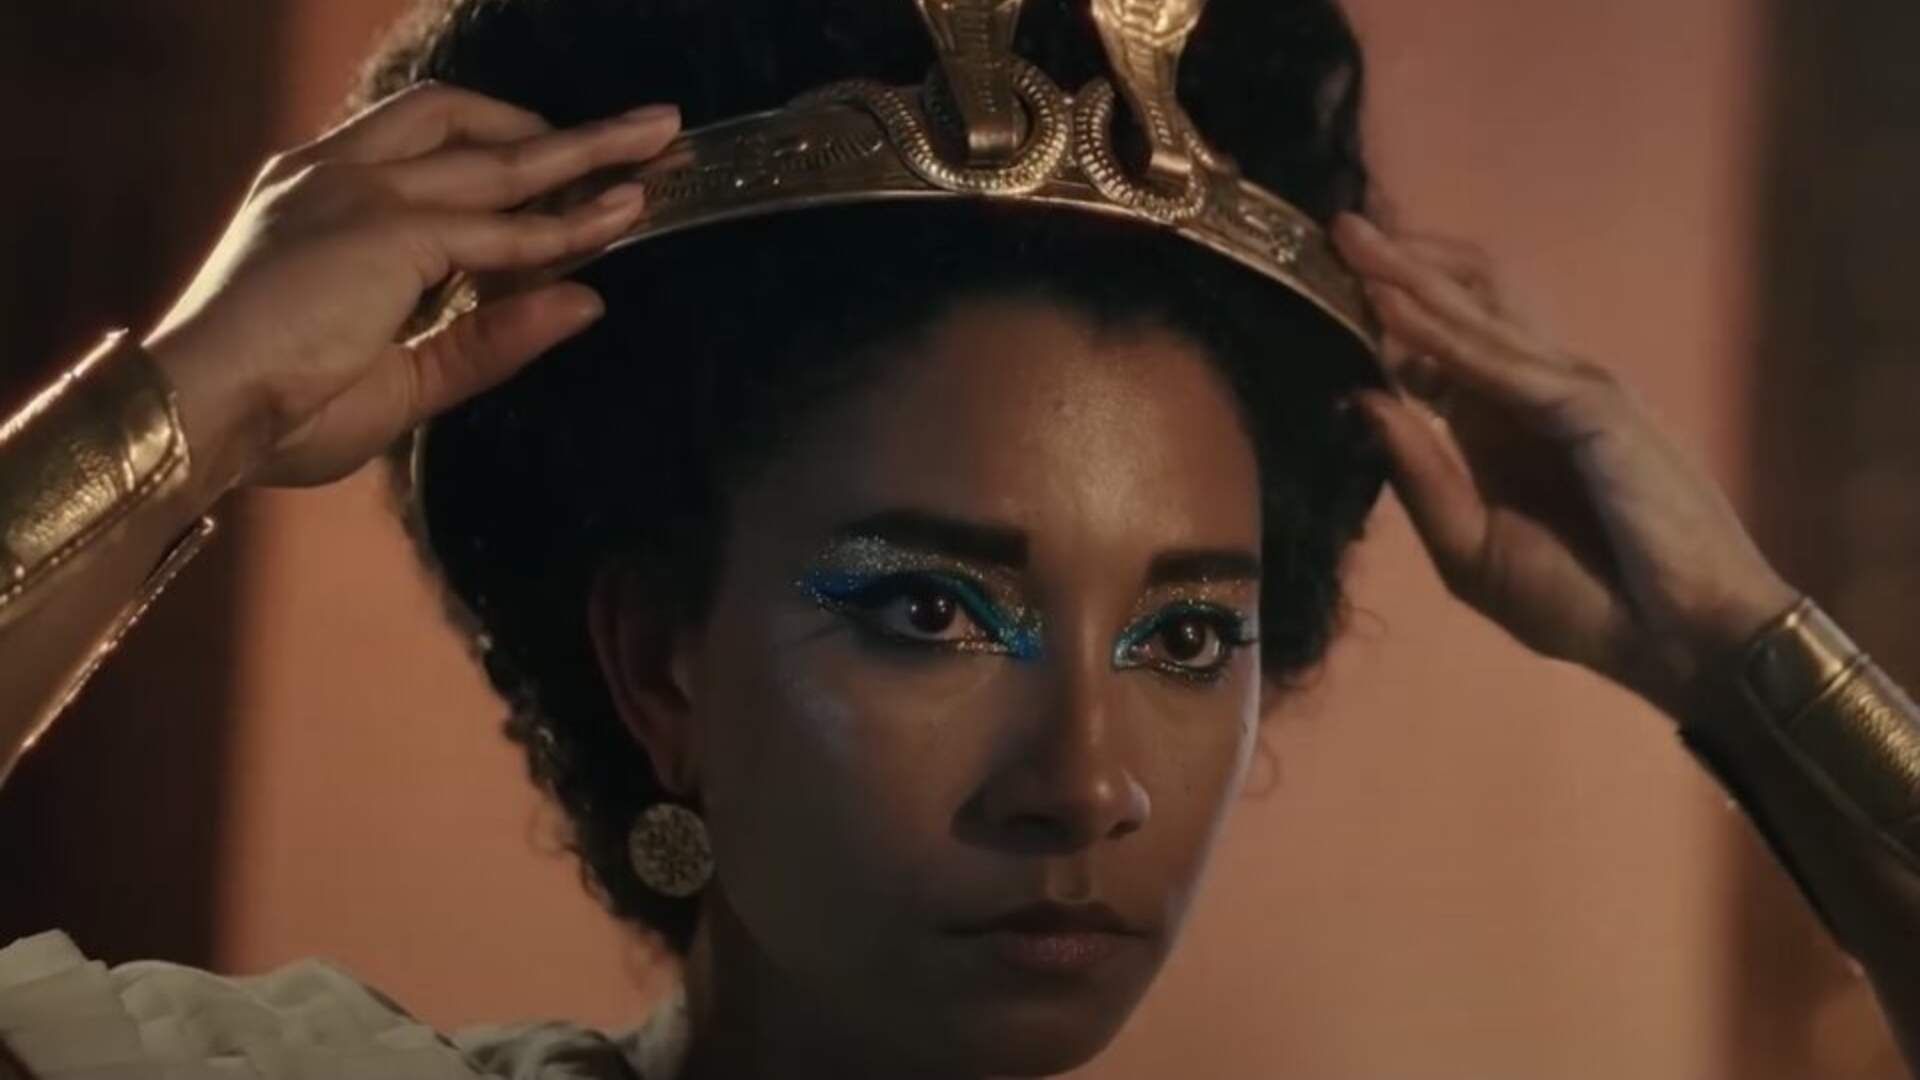 Rainha Cleópatra: Drama biográfico protagonizado por Adele James já está disponível na Netflix - Metropolitana FM